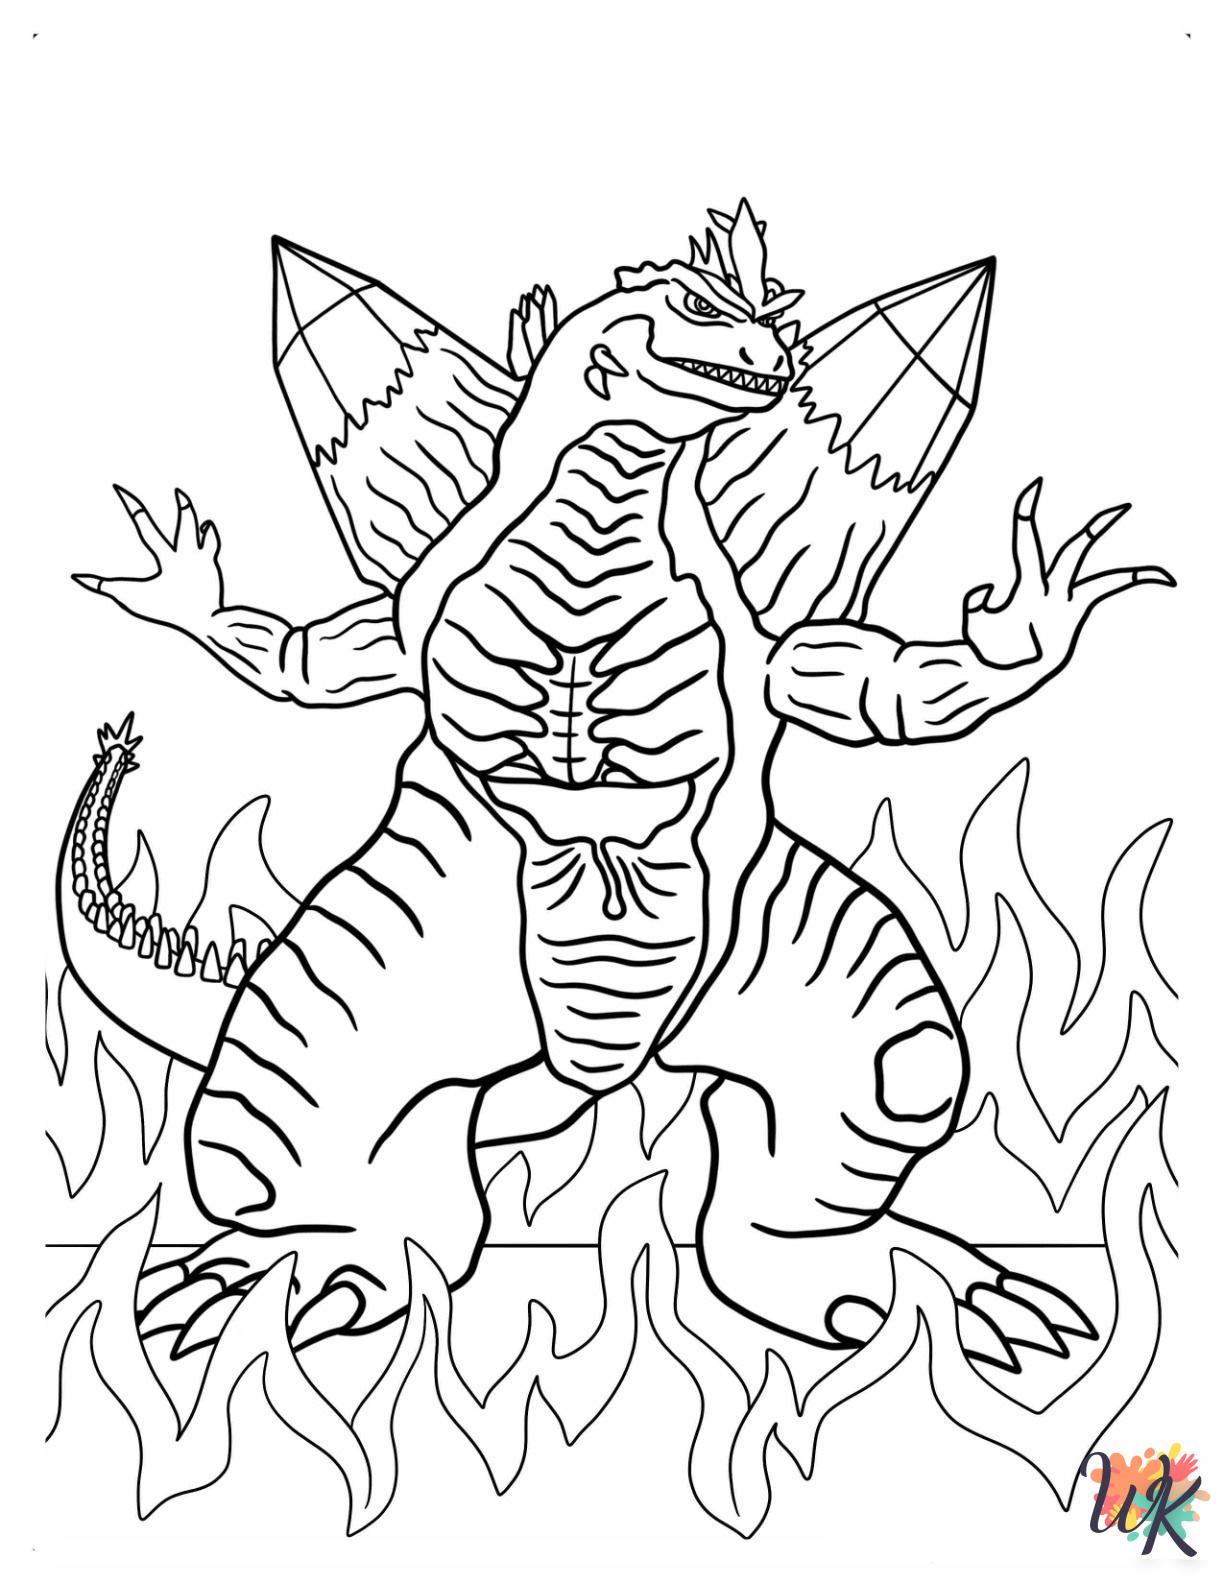 Godzilla coloring pages free